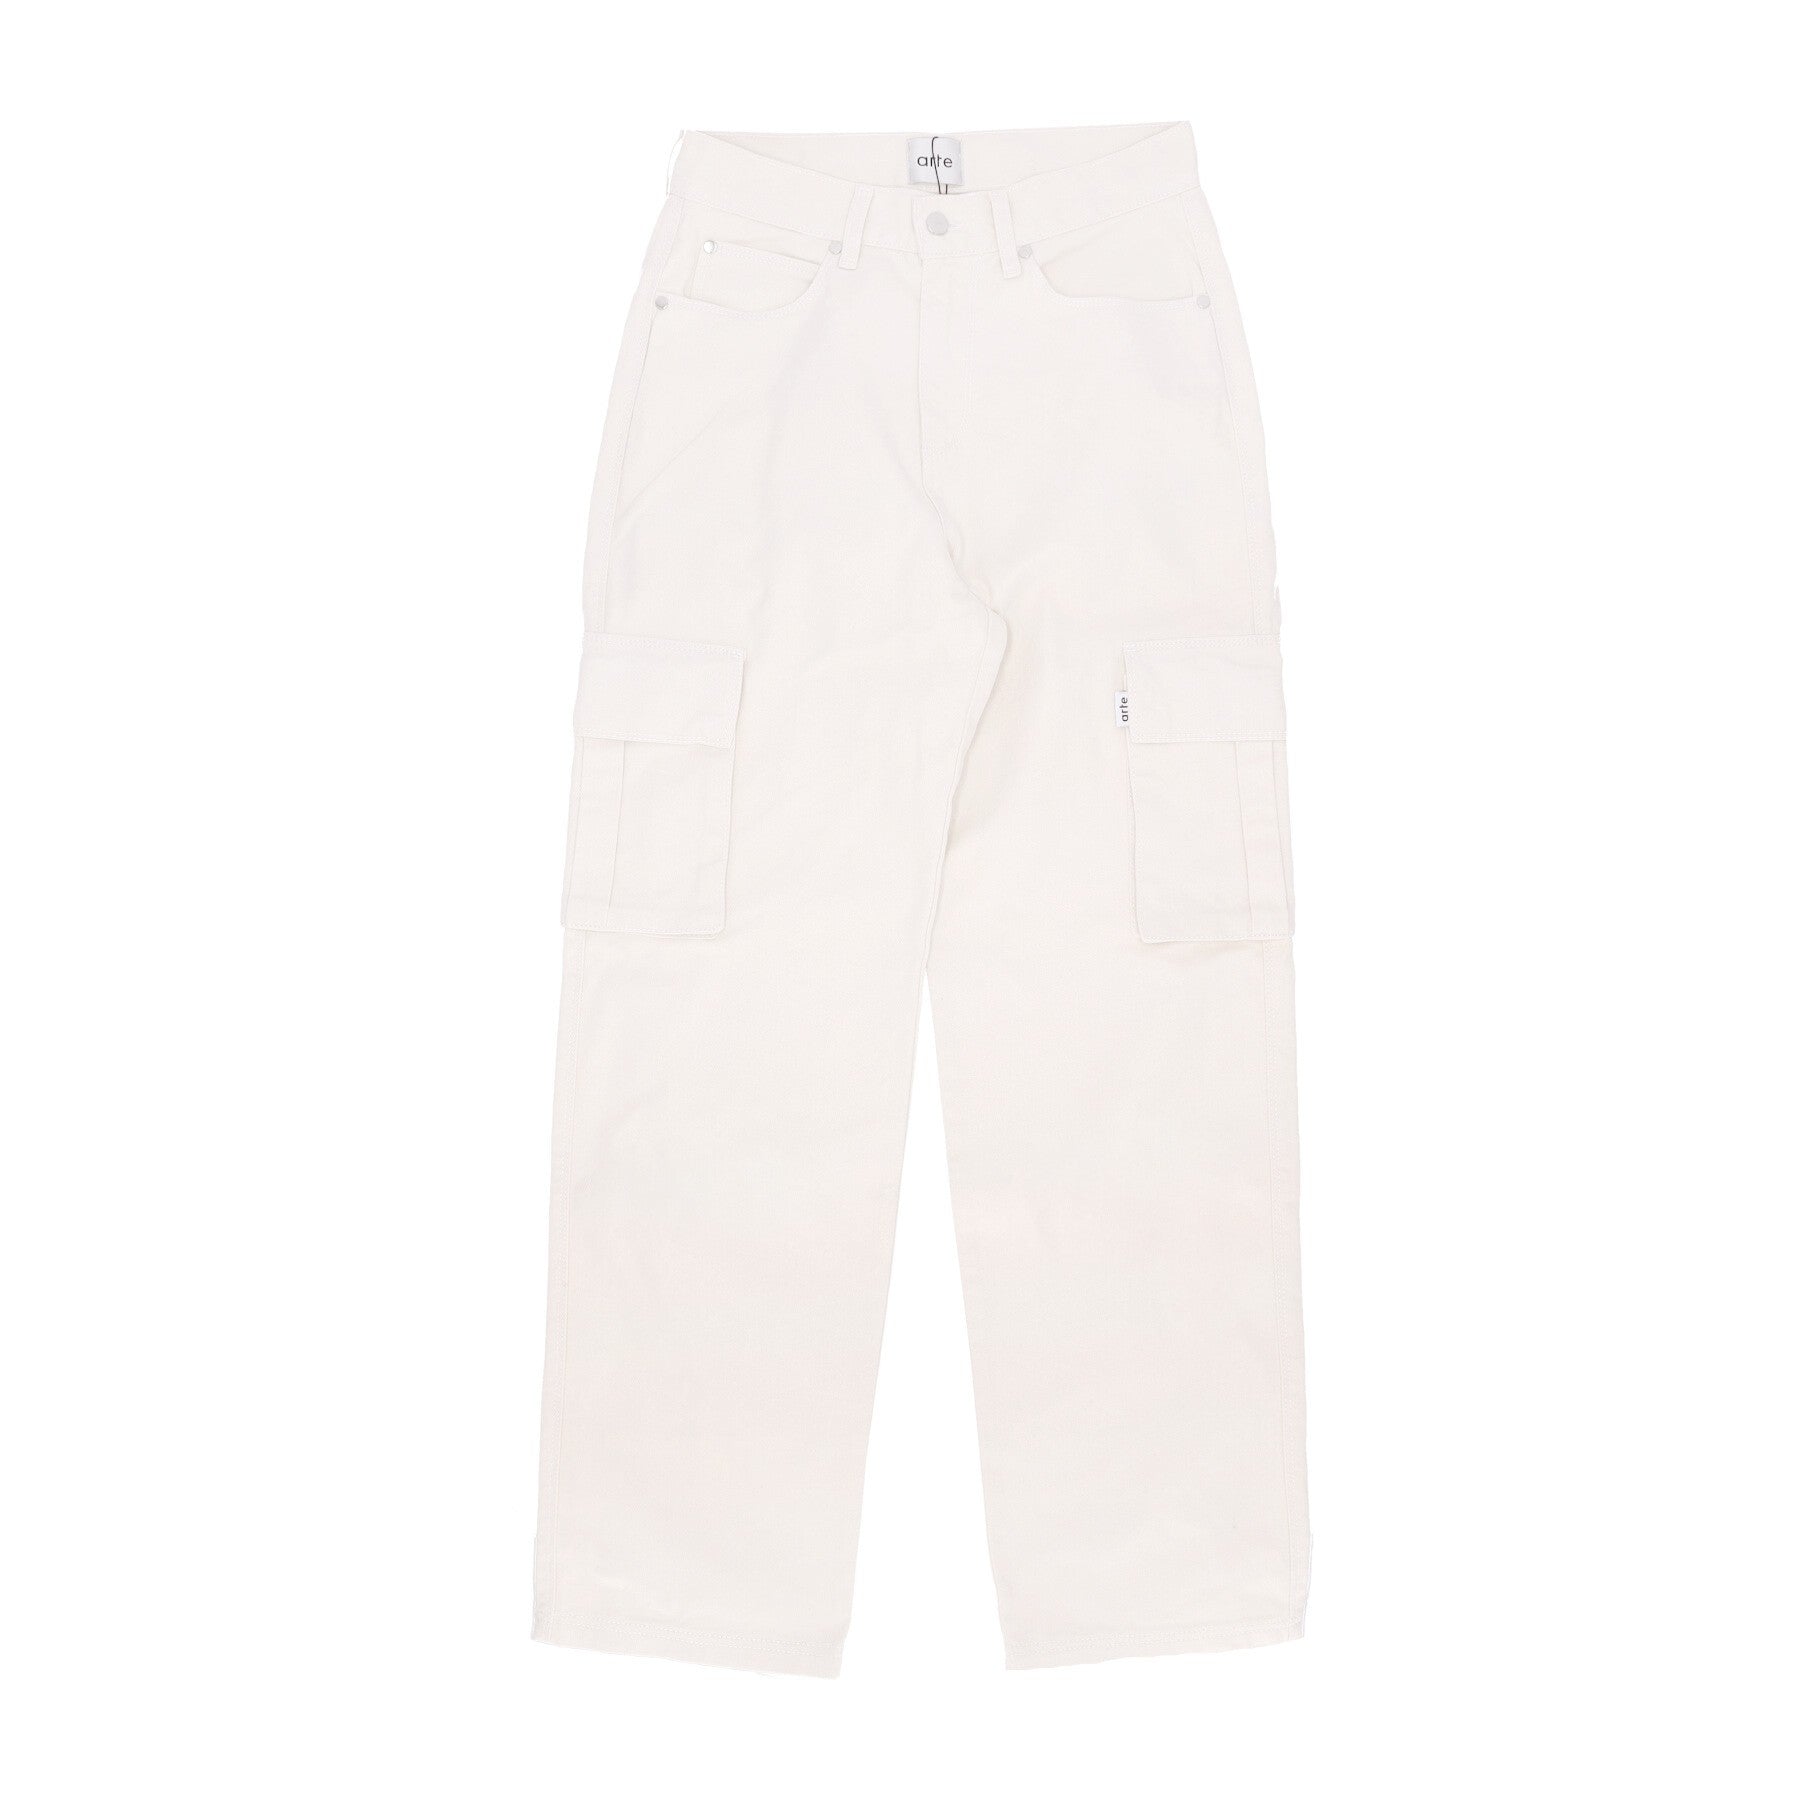 Peter Detail Pocket Pants Cream Men's Long Trousers